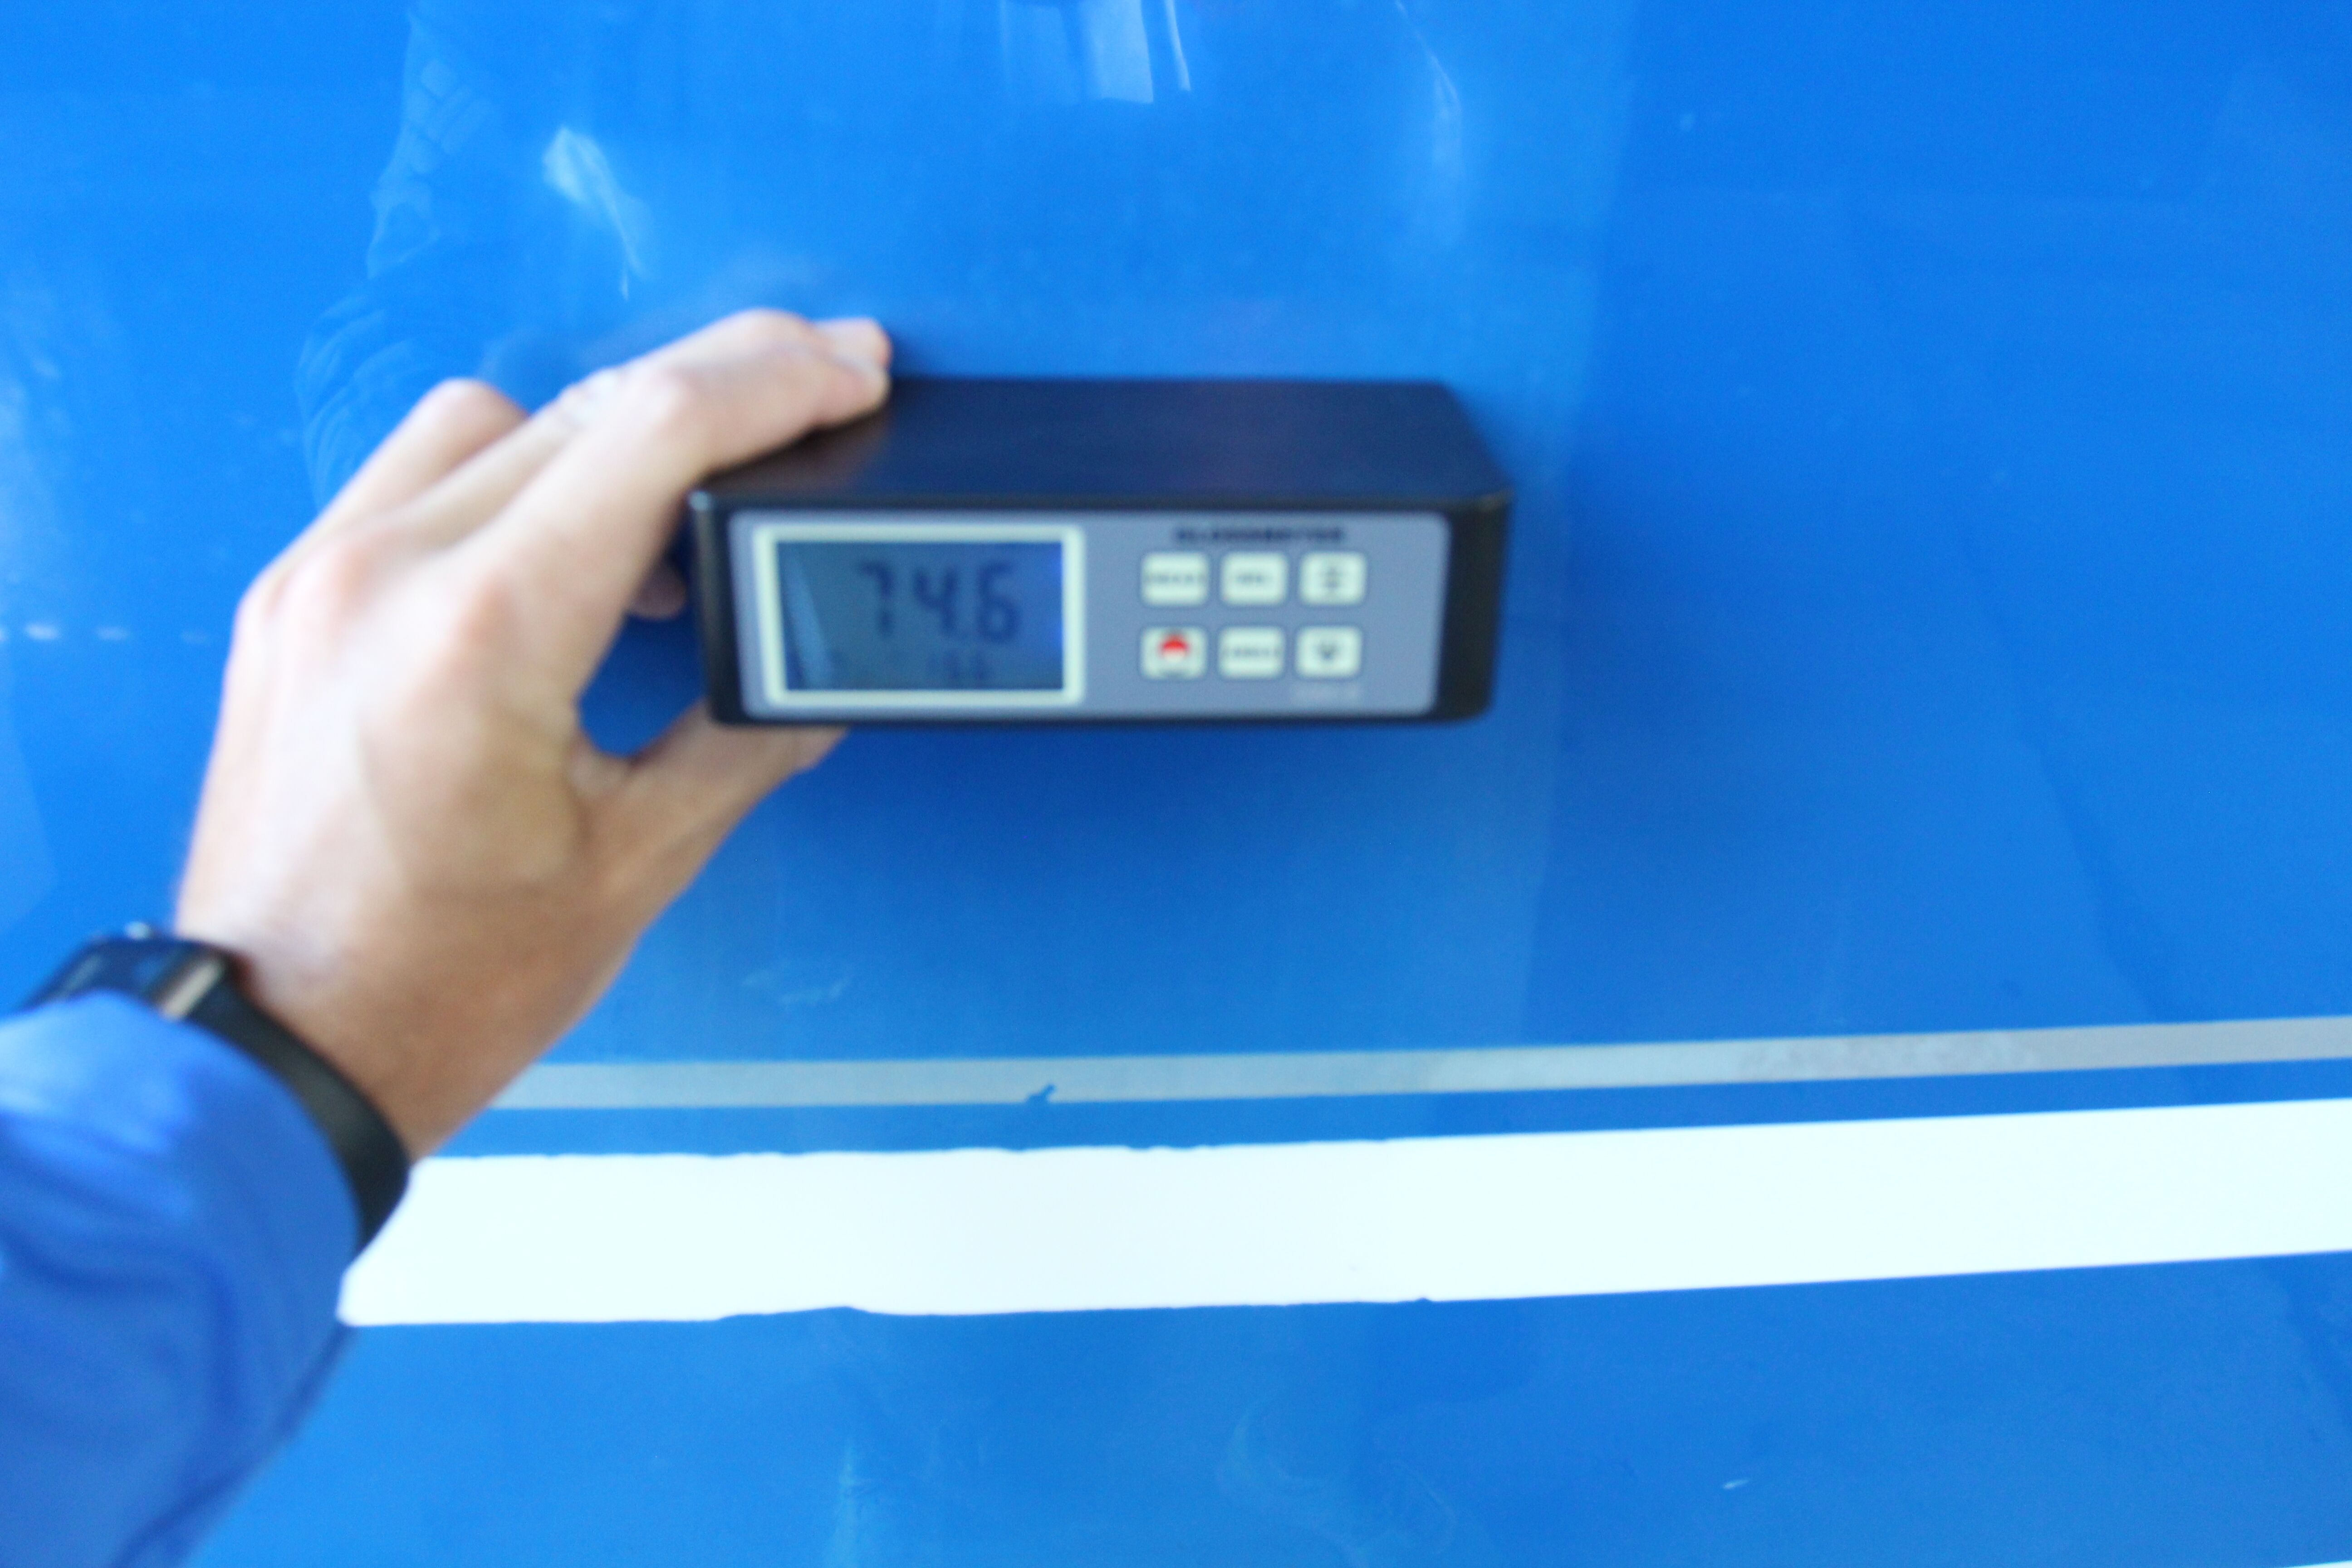 74.6 gloss meter reading before Glidecoat marine ceramic coating application